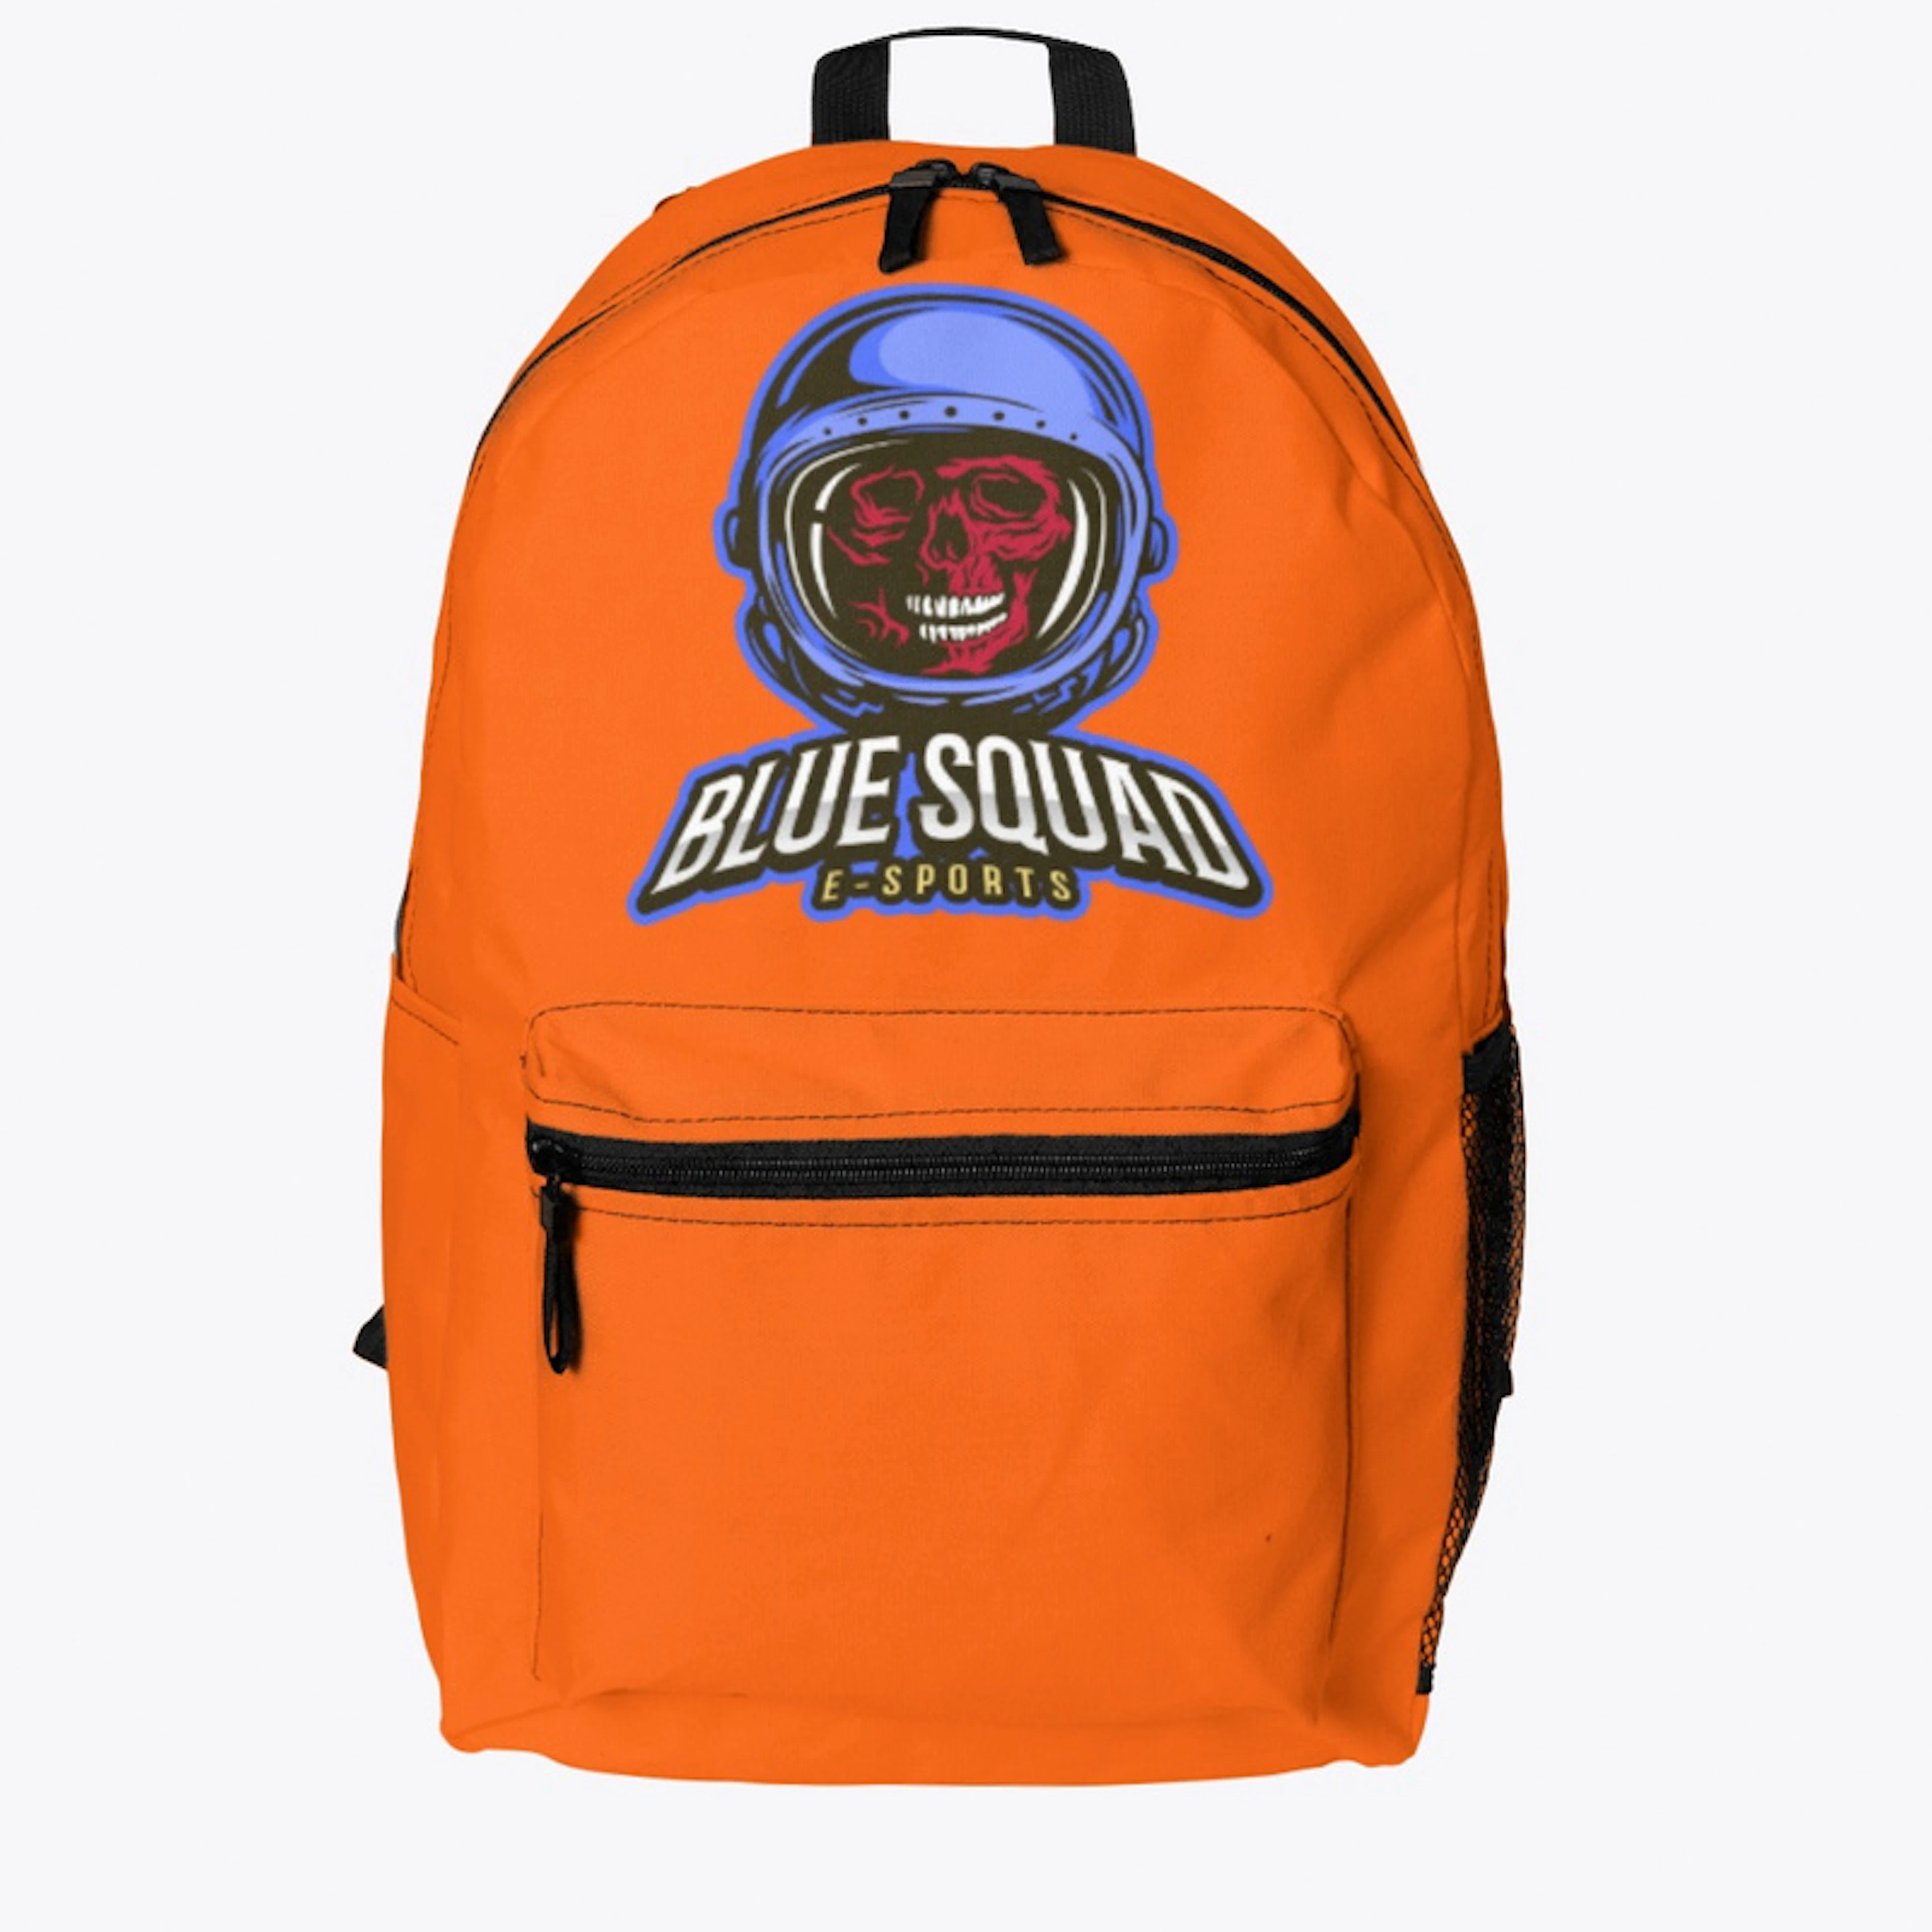 Blue Squad eSports Back Pack